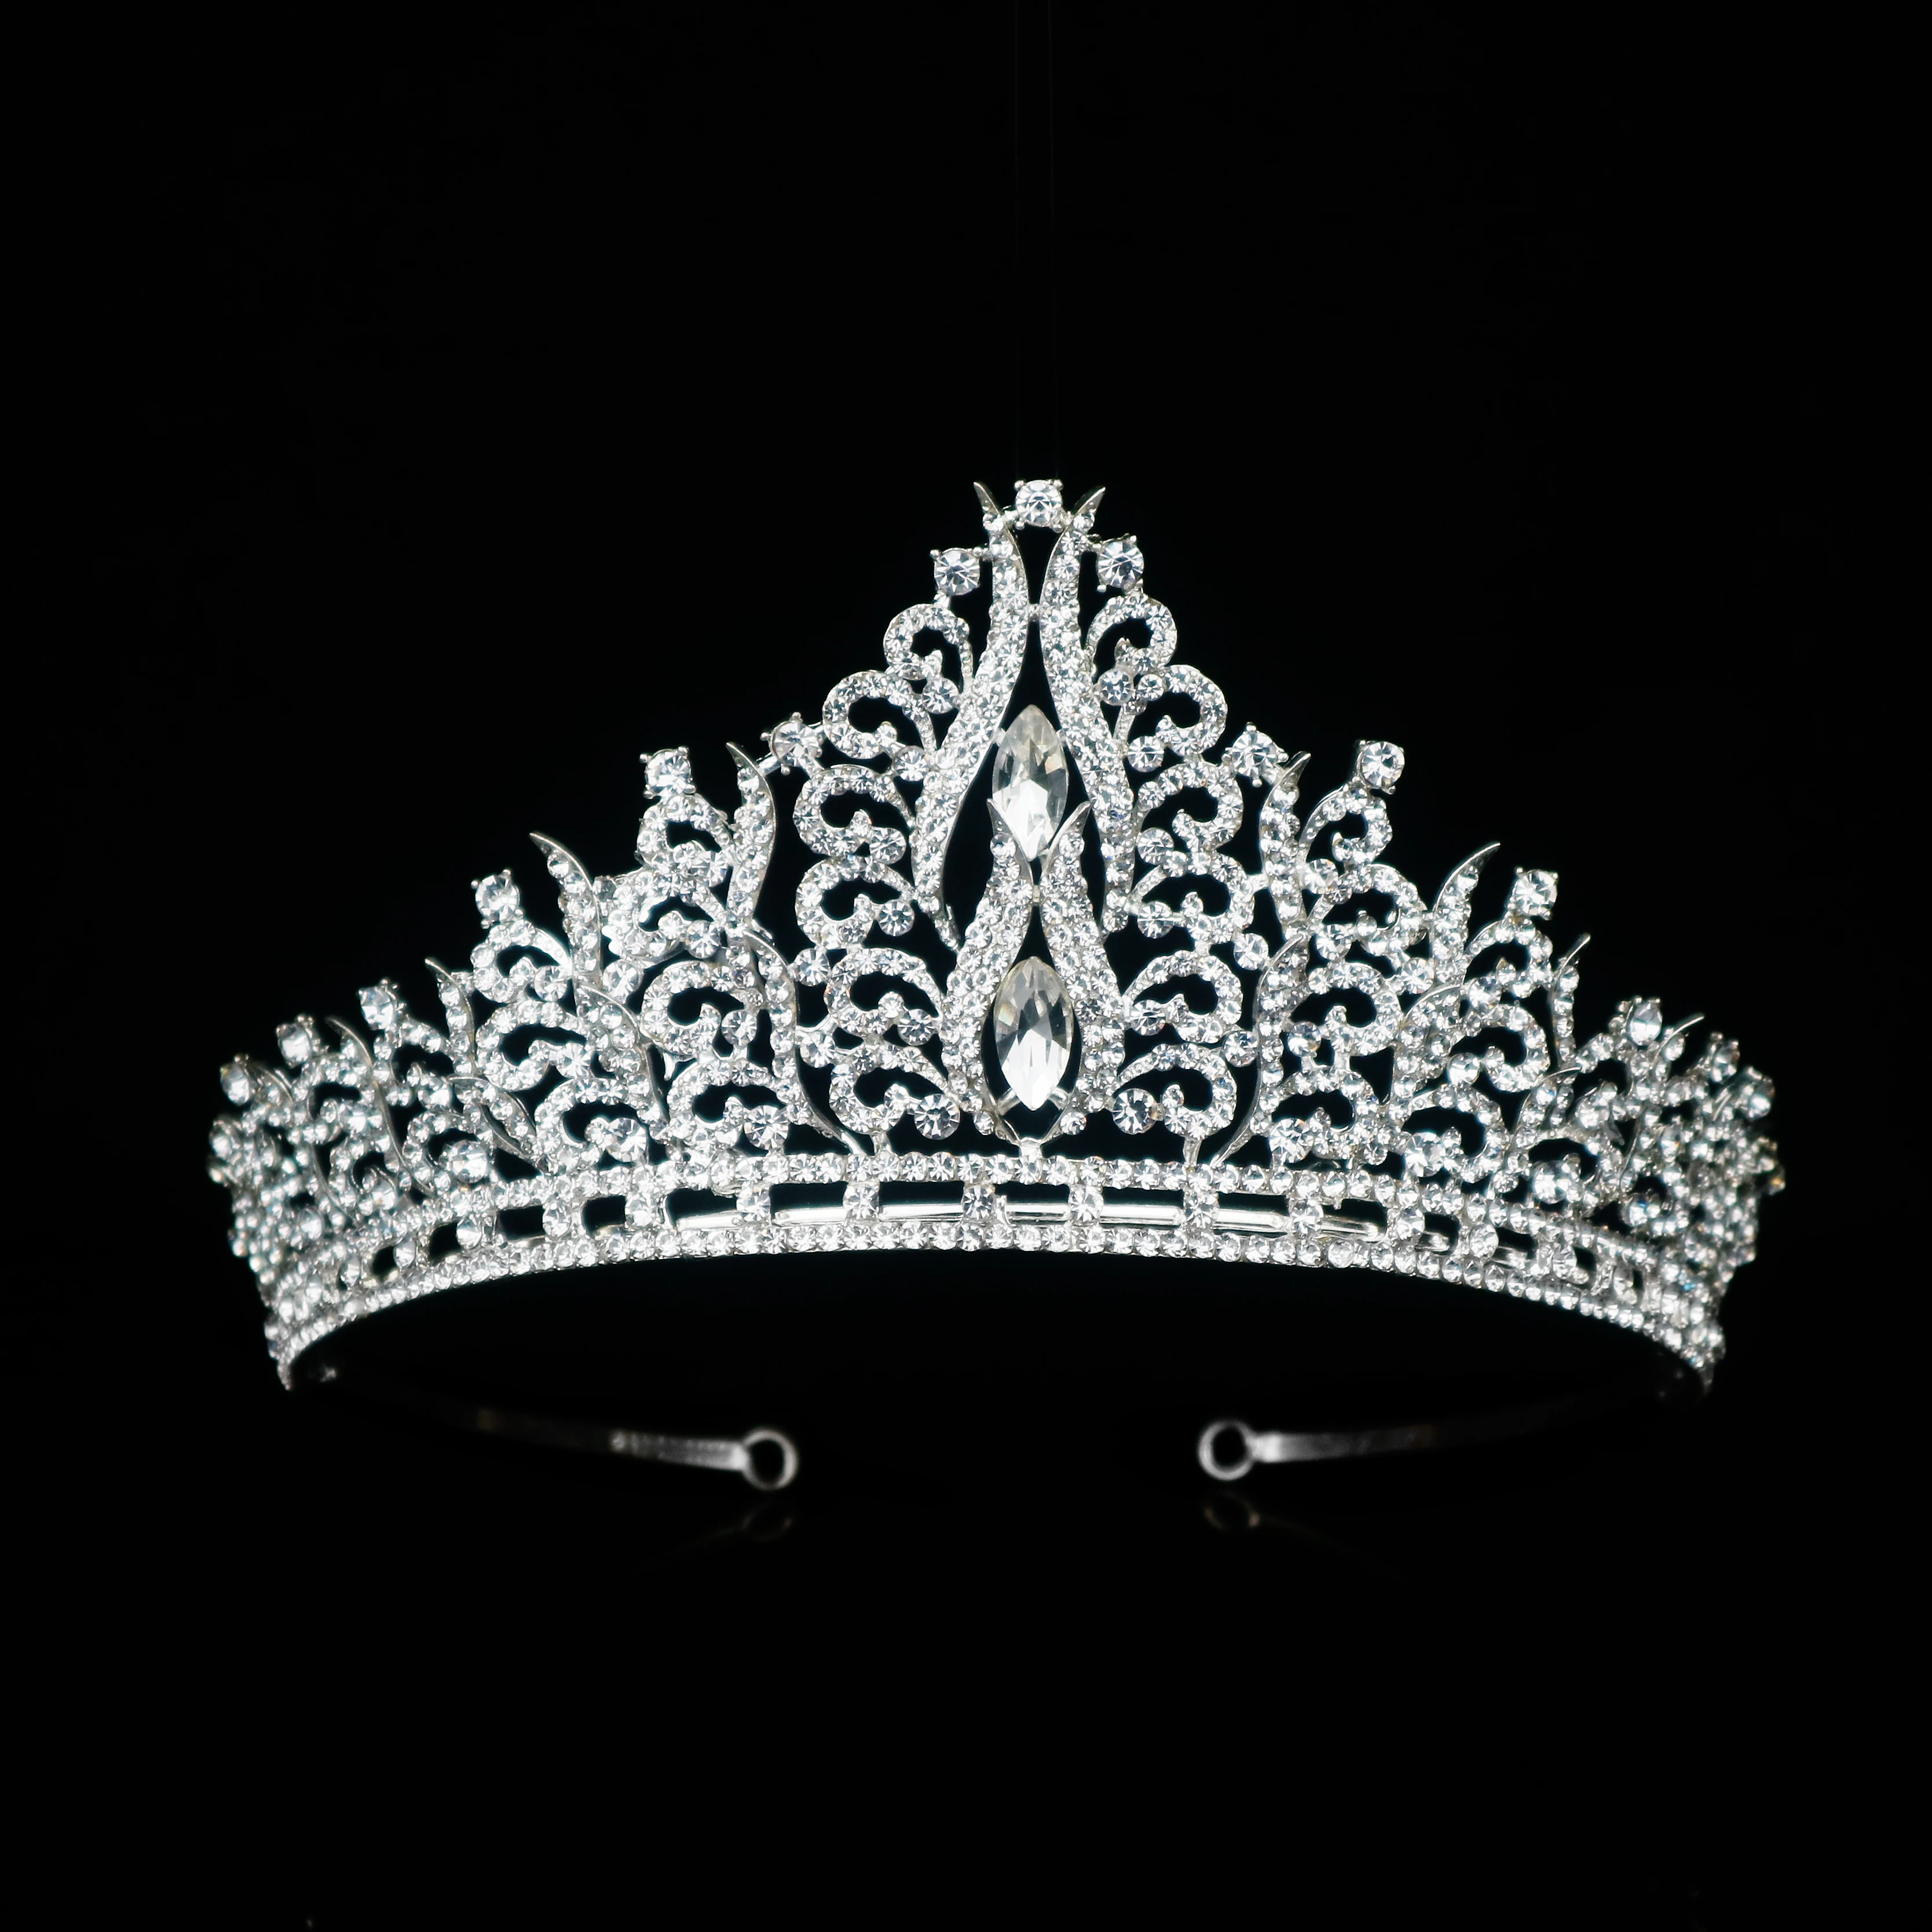 OSALADI Vintage Reina Cristal Diamante de Imitación Barroco Corona Nupcial Tiara Tocado Prom Corona 